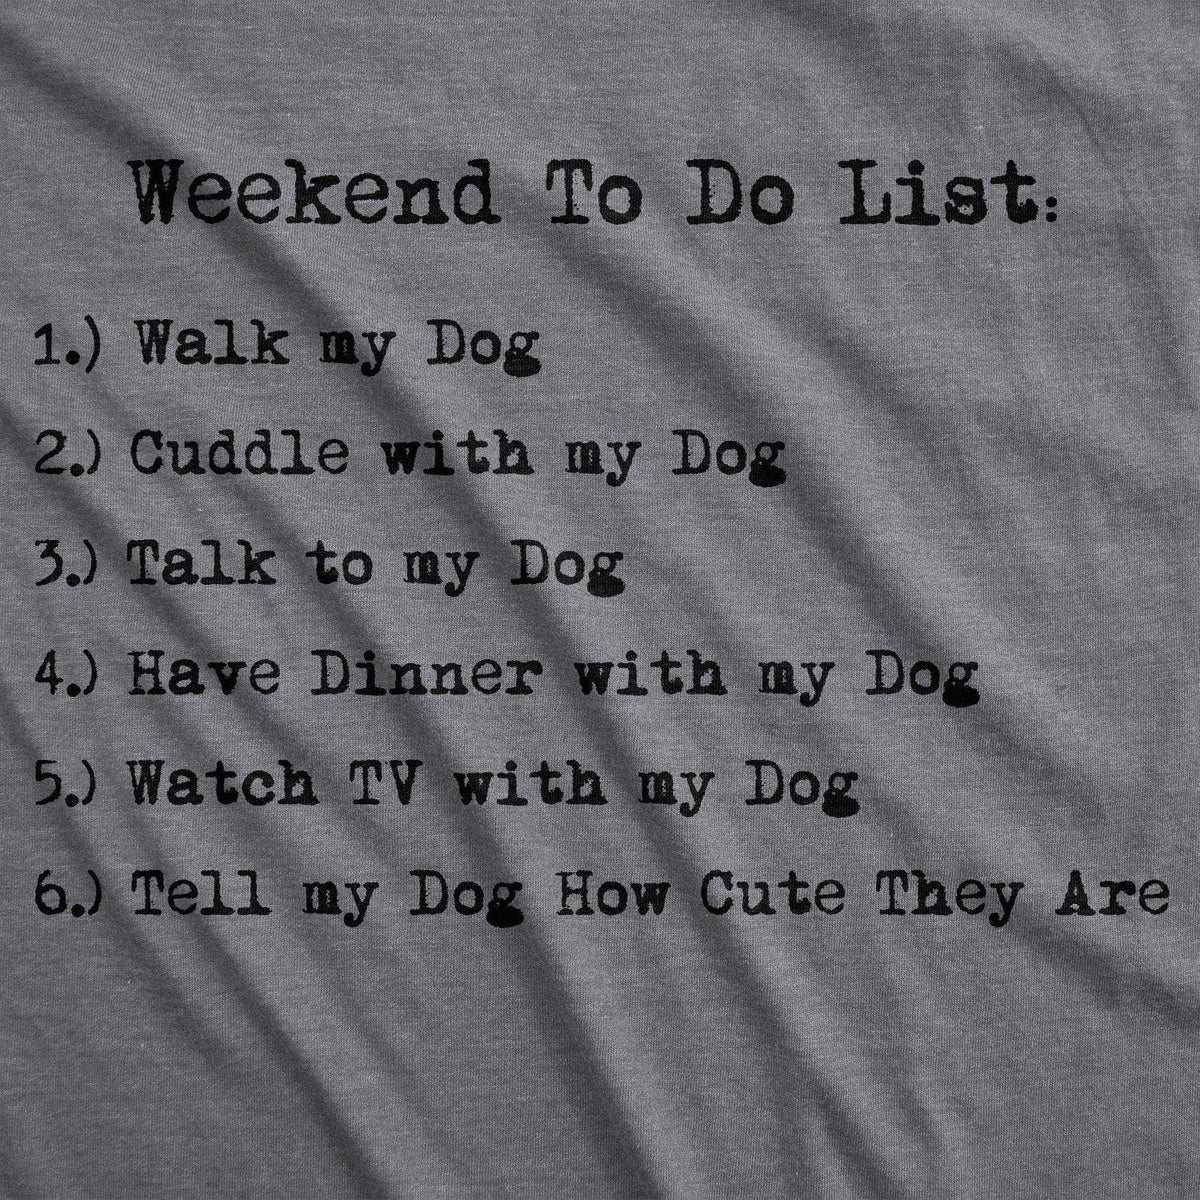 Weekend To Do List Women&#39;s Tshirt  -  Crazy Dog T-Shirts